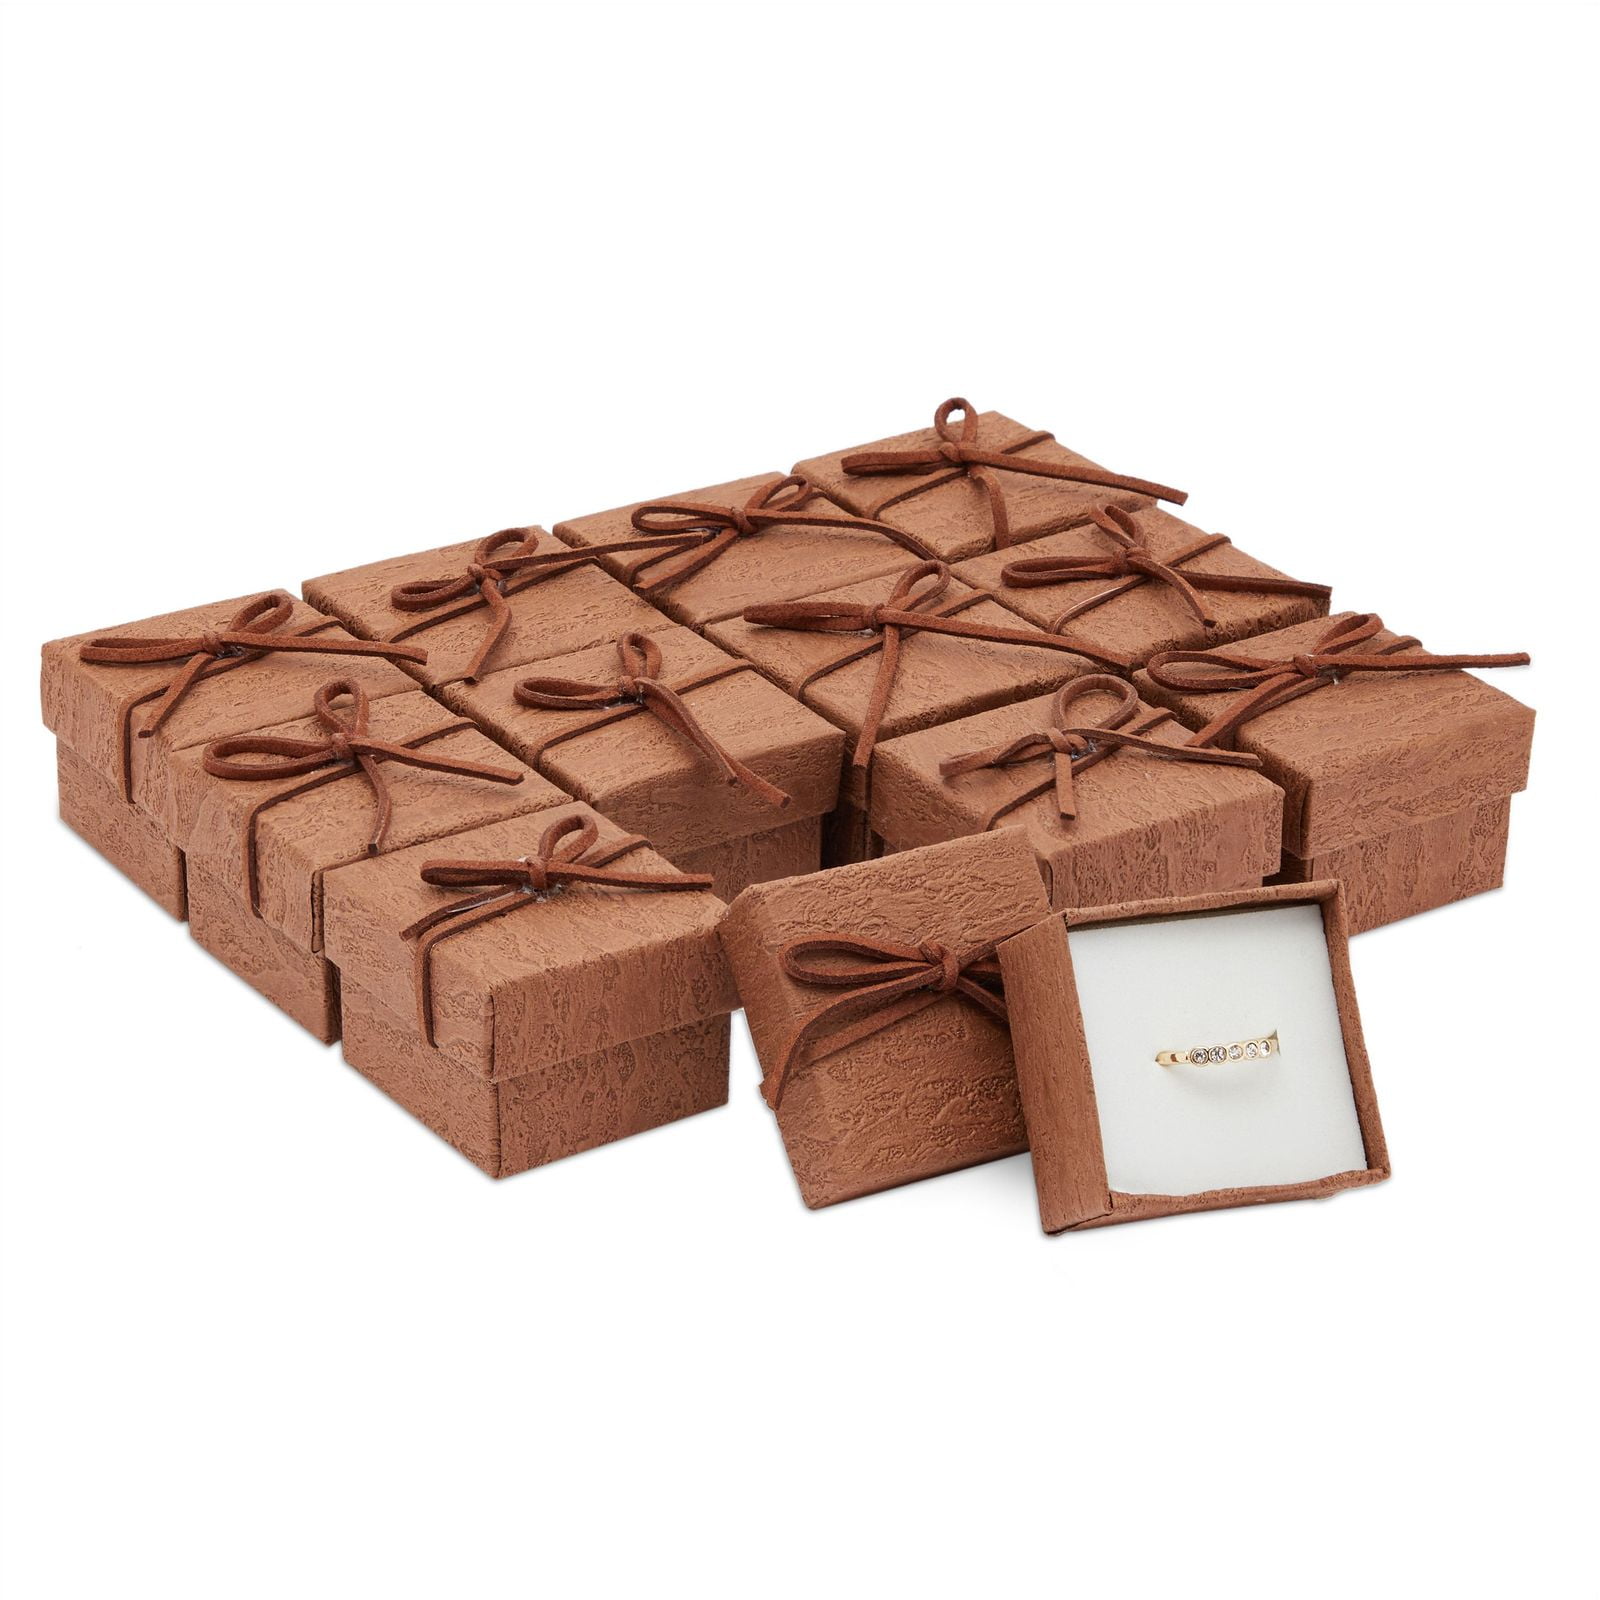 10PCS Paper Sponge Small Ring Box 4x4 Small Jewelry Gift Box Bow